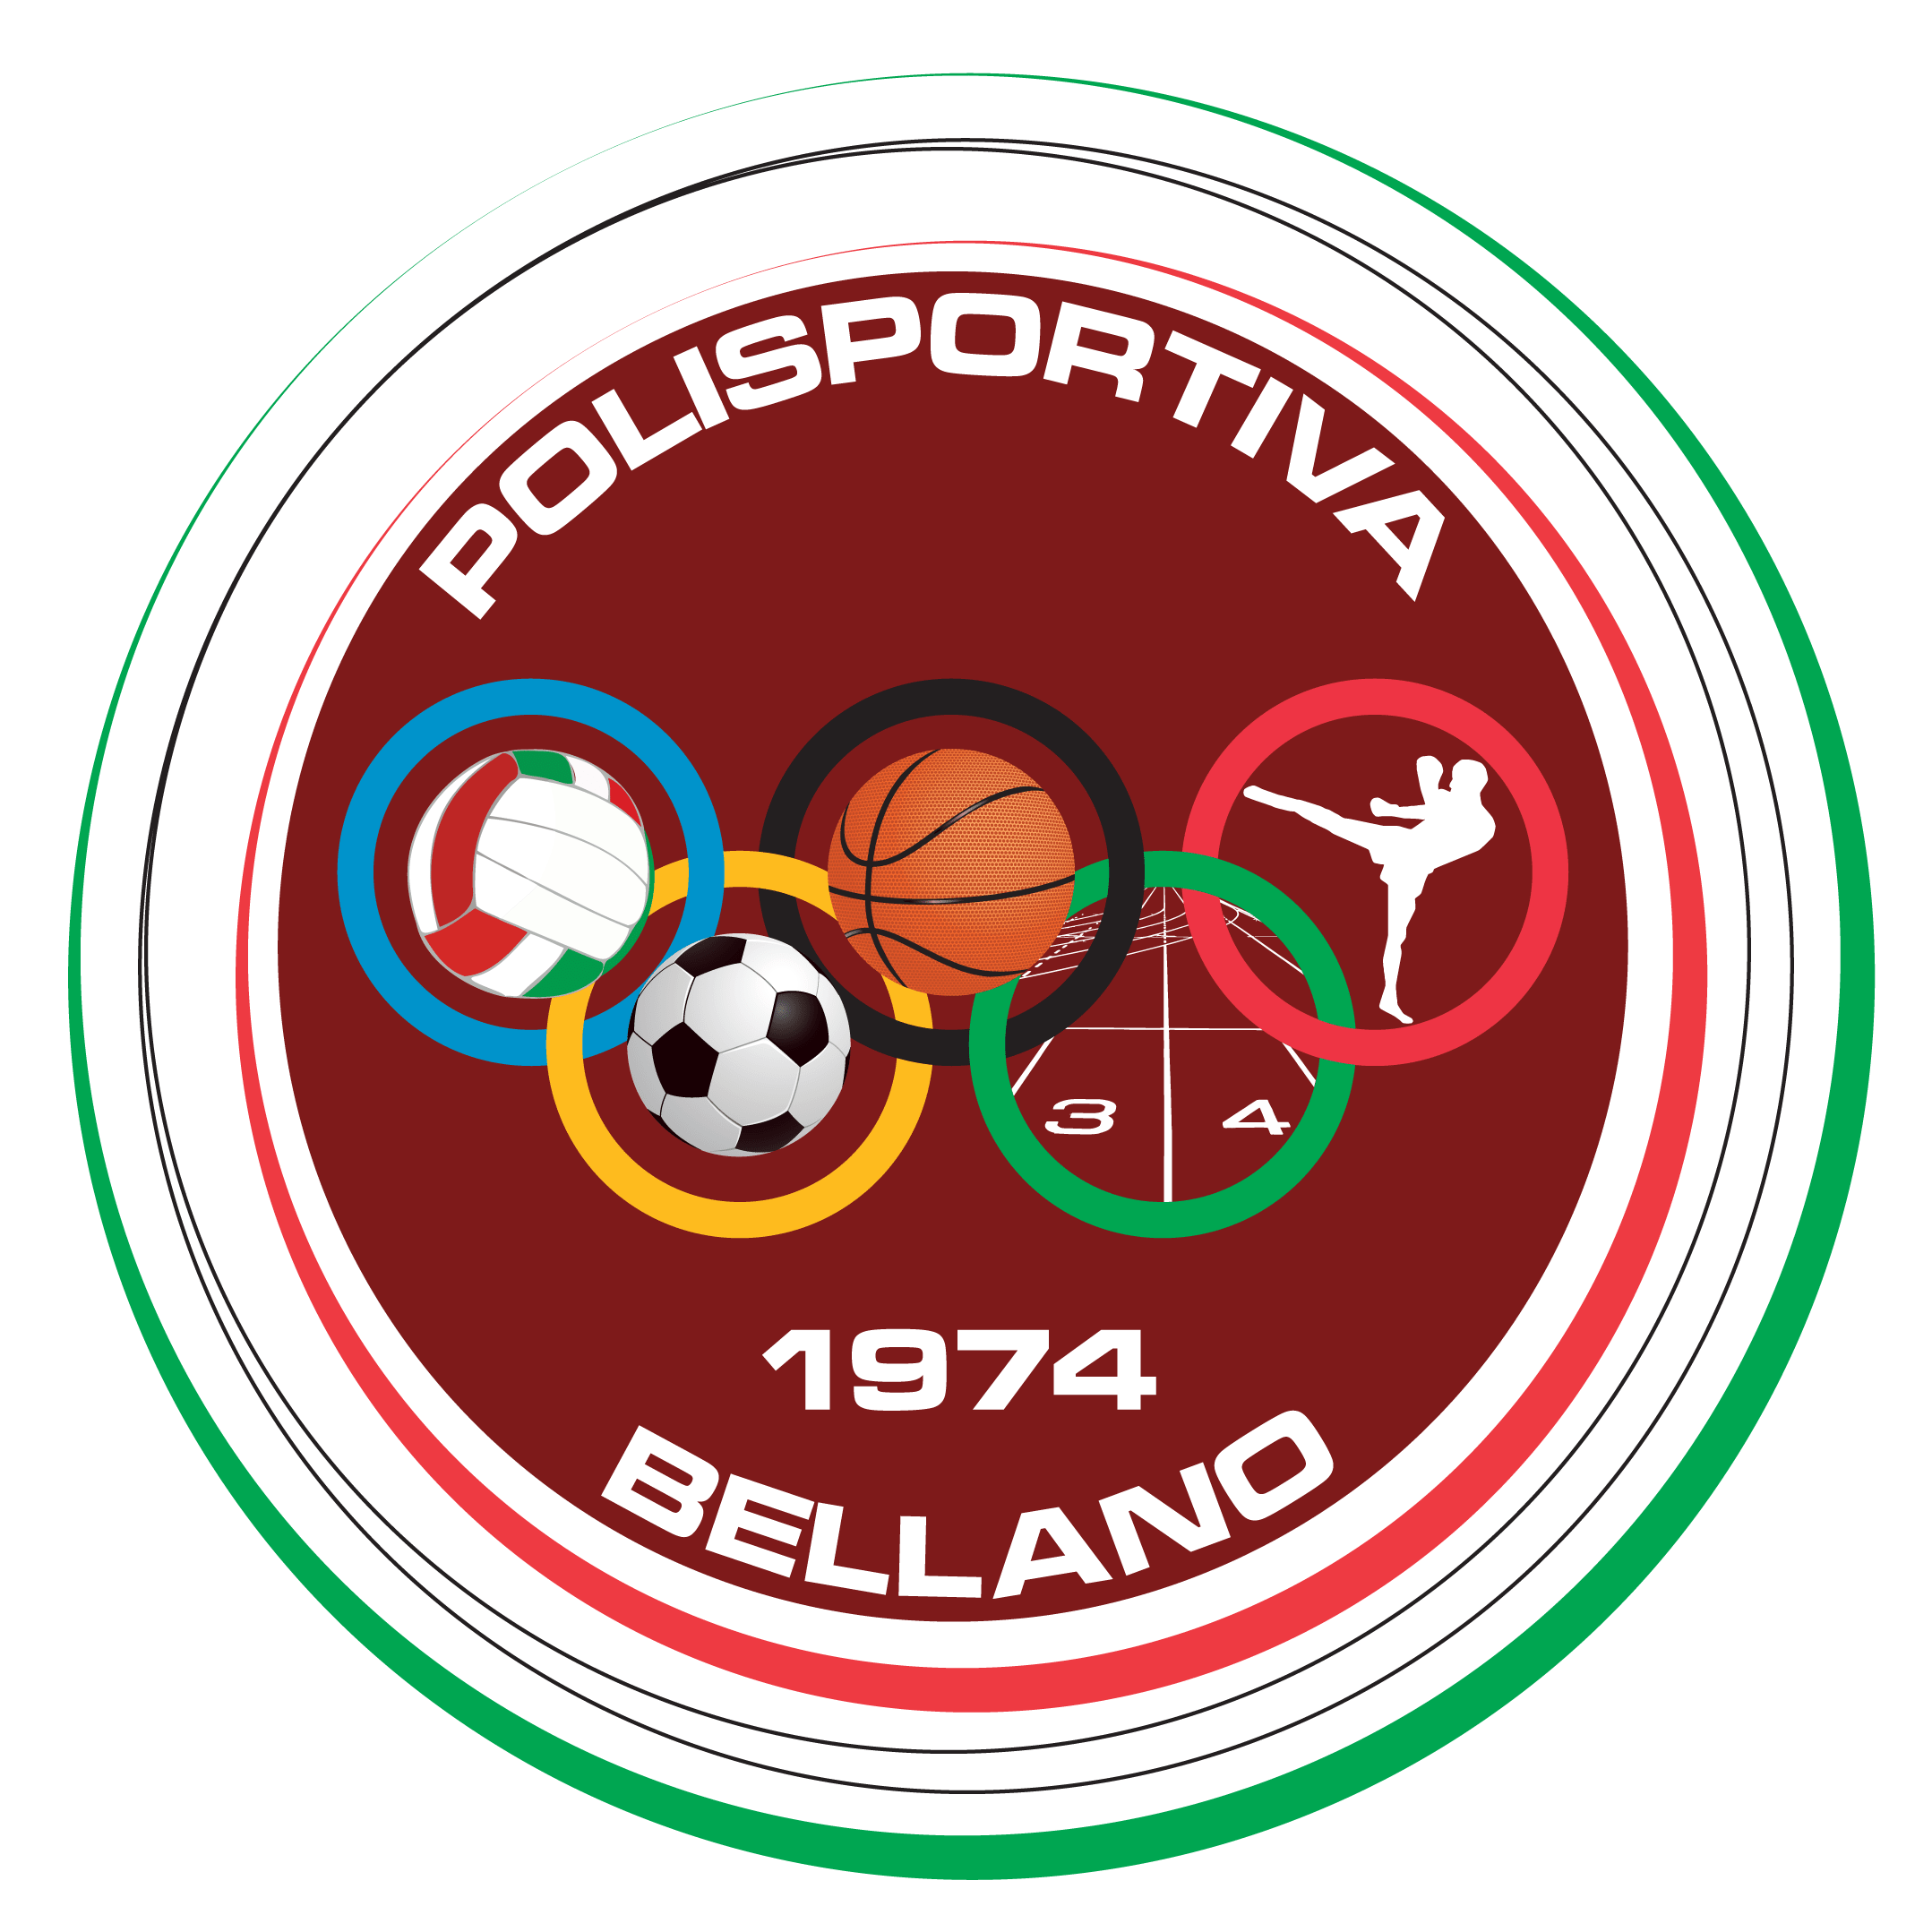 Polisportiva Bellano - Generale